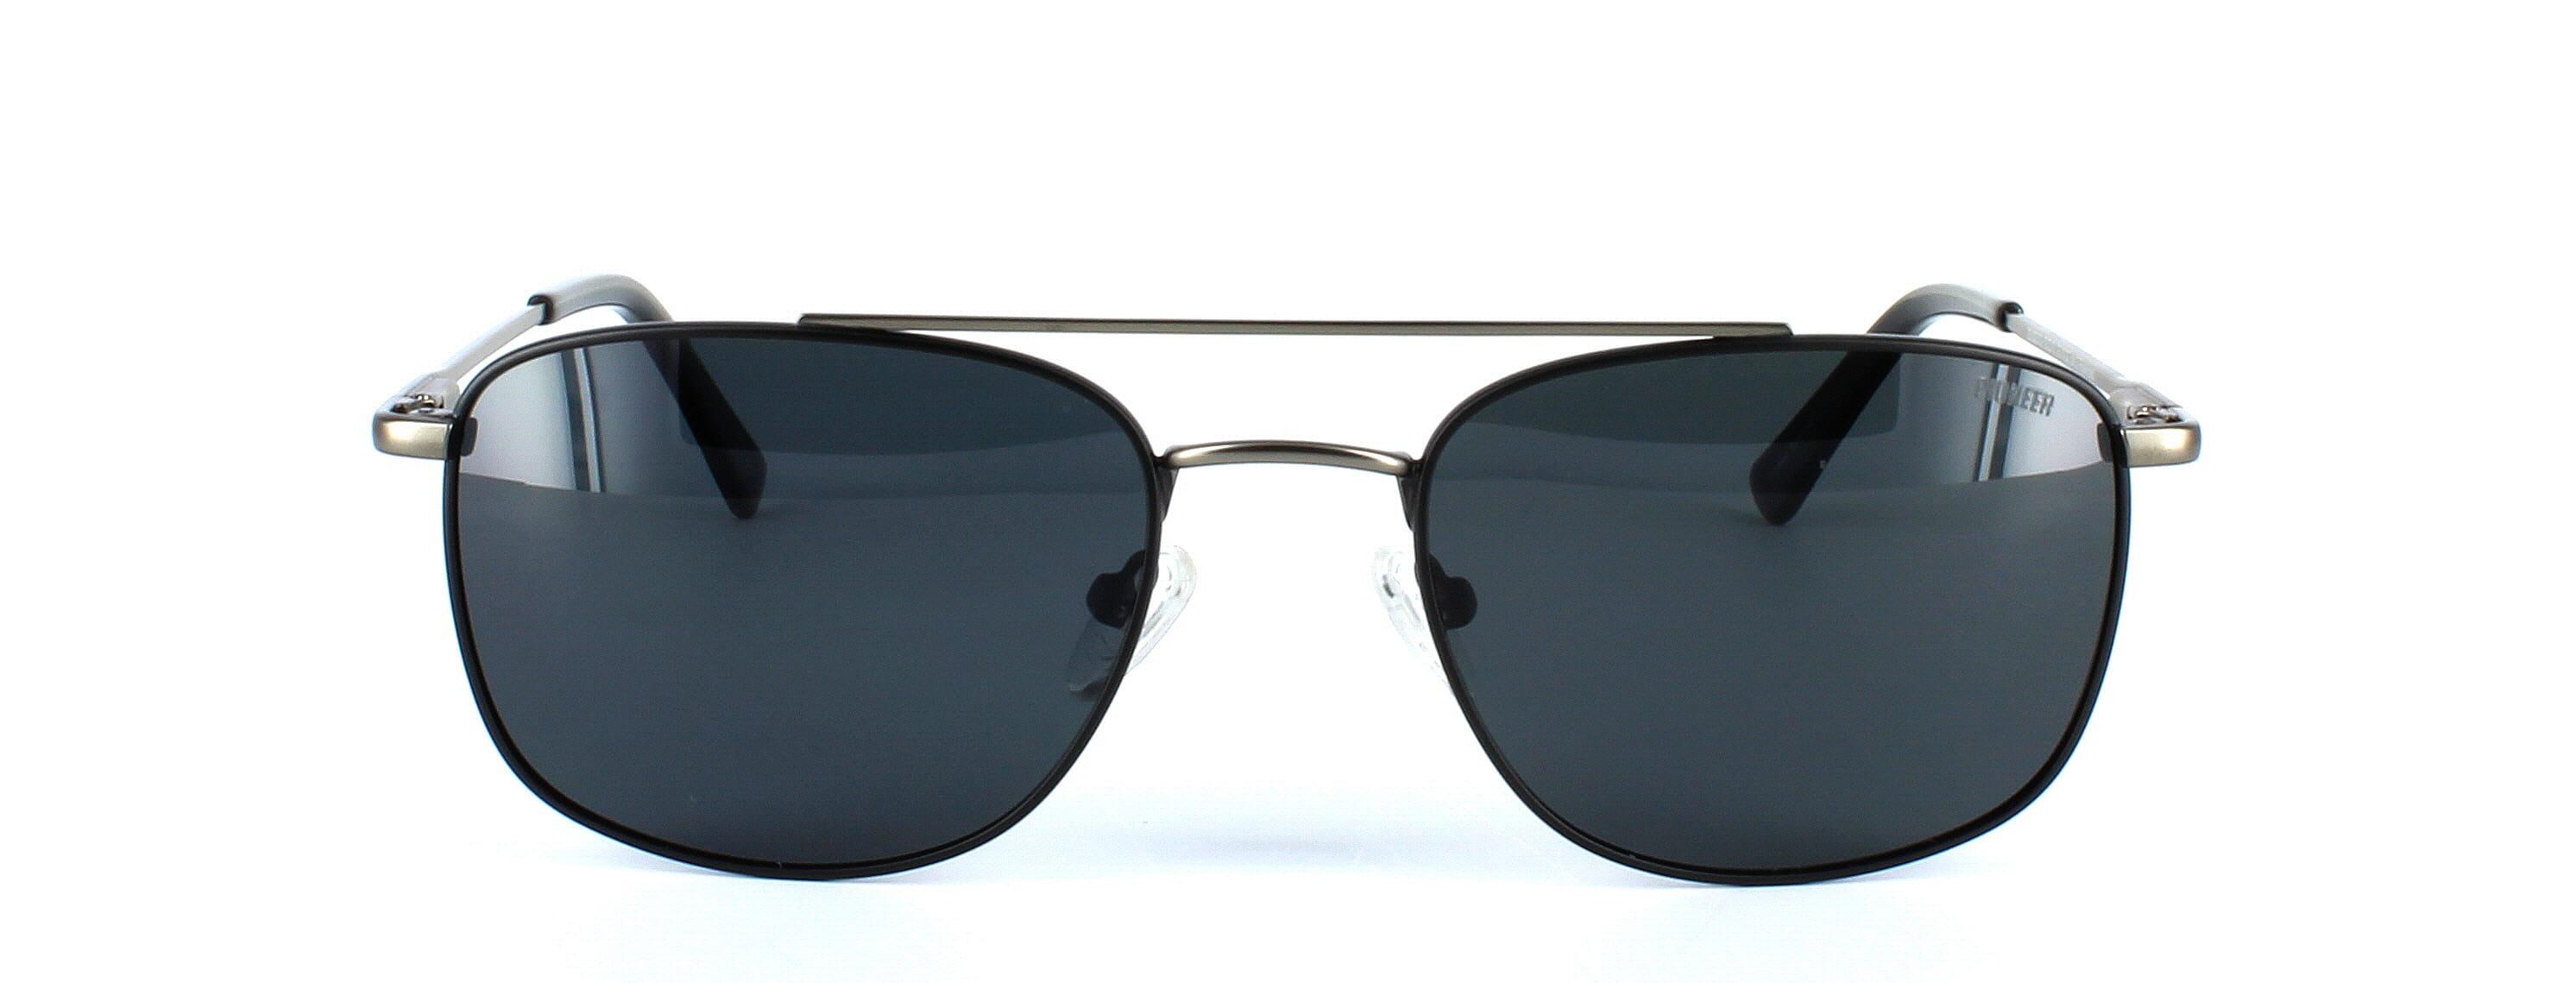 Carlo - Unisex 2-tone aviator style sunglasses here in black and gunmetal - image view 4